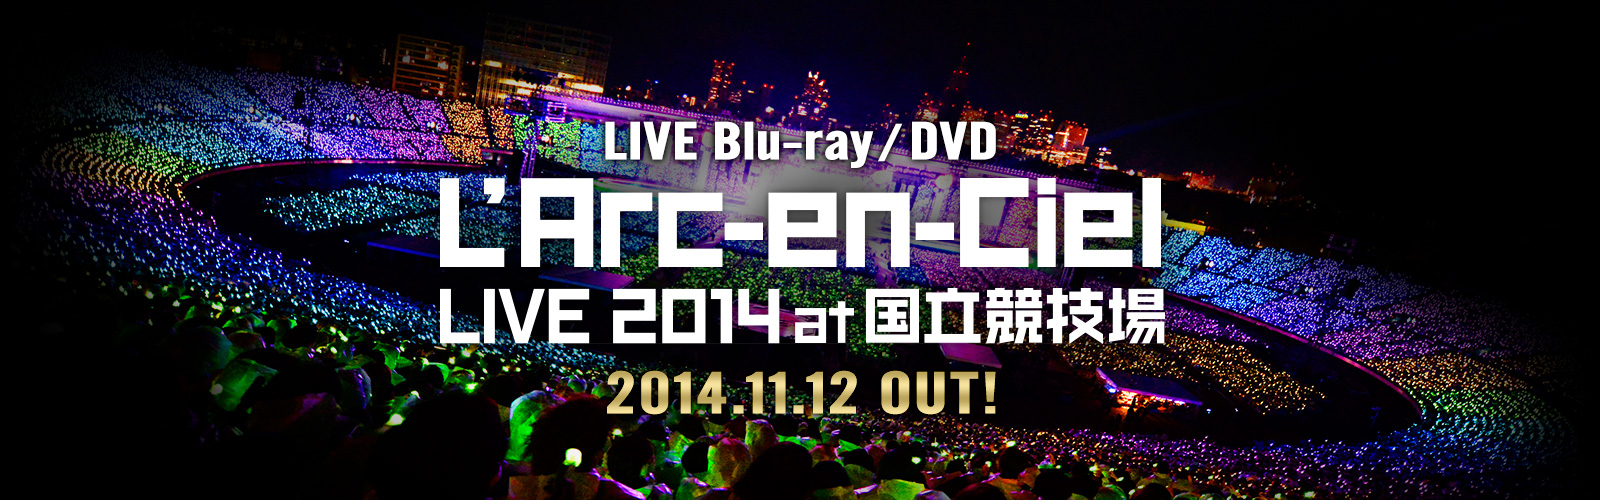 LIVE Blu-ray / DVD
「L'Arc～en～Ciel LIVE 2014 at 国立競技場」
2014.11.12 OUT!